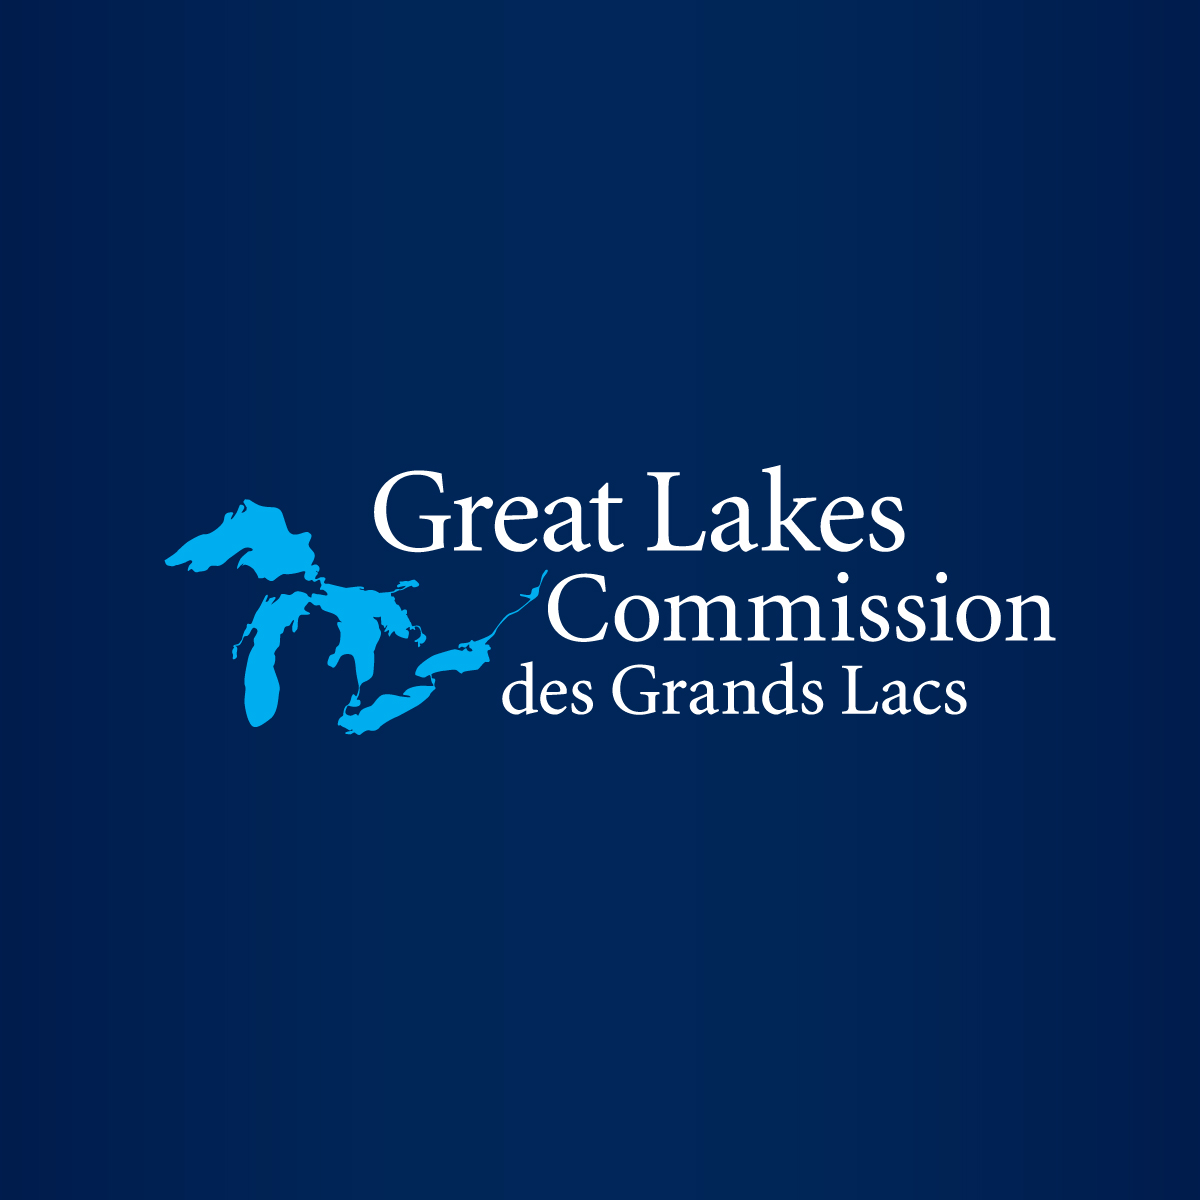 Great Lakes Seaway Partnership celebrates start of shipping season with photo contest